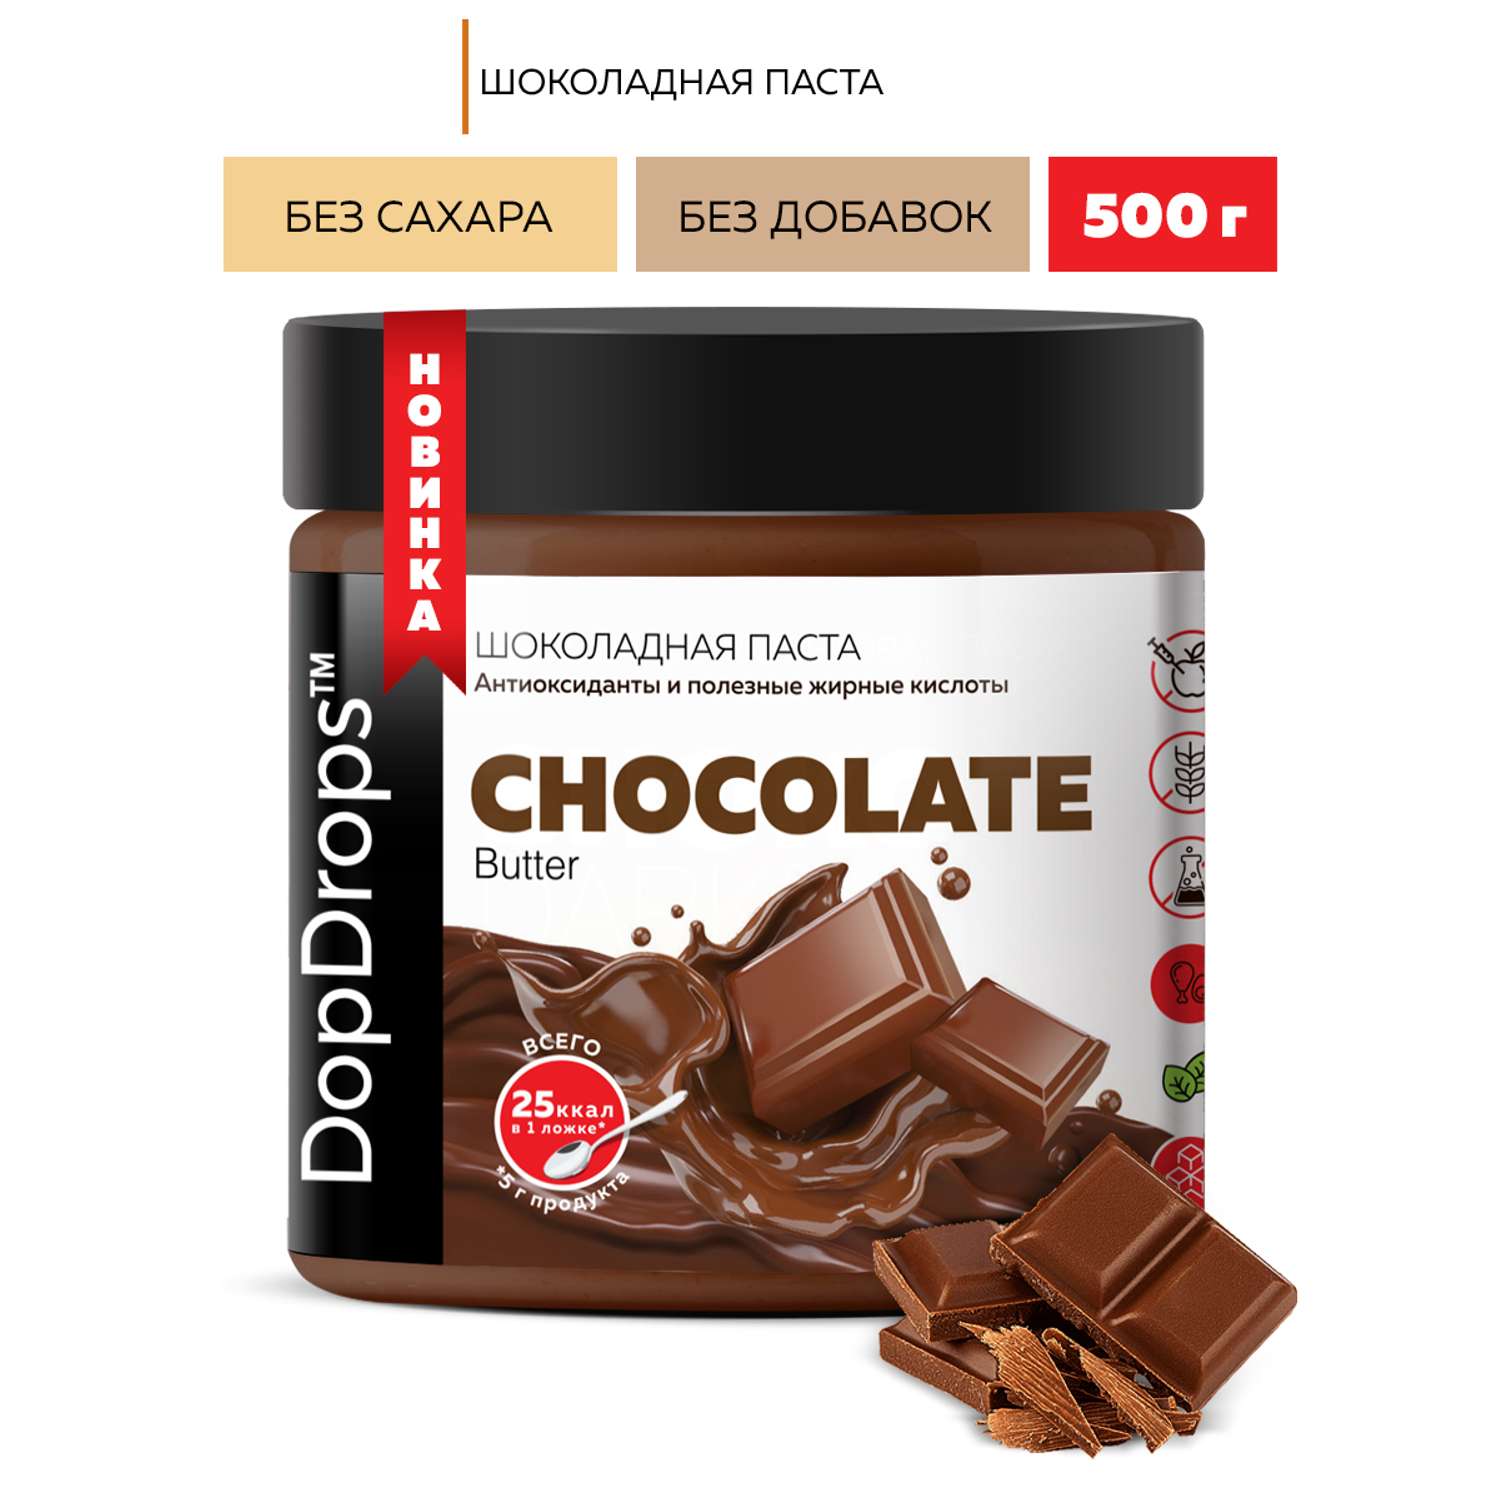 Шоколадная паста DopDrops 500 г - фото 1